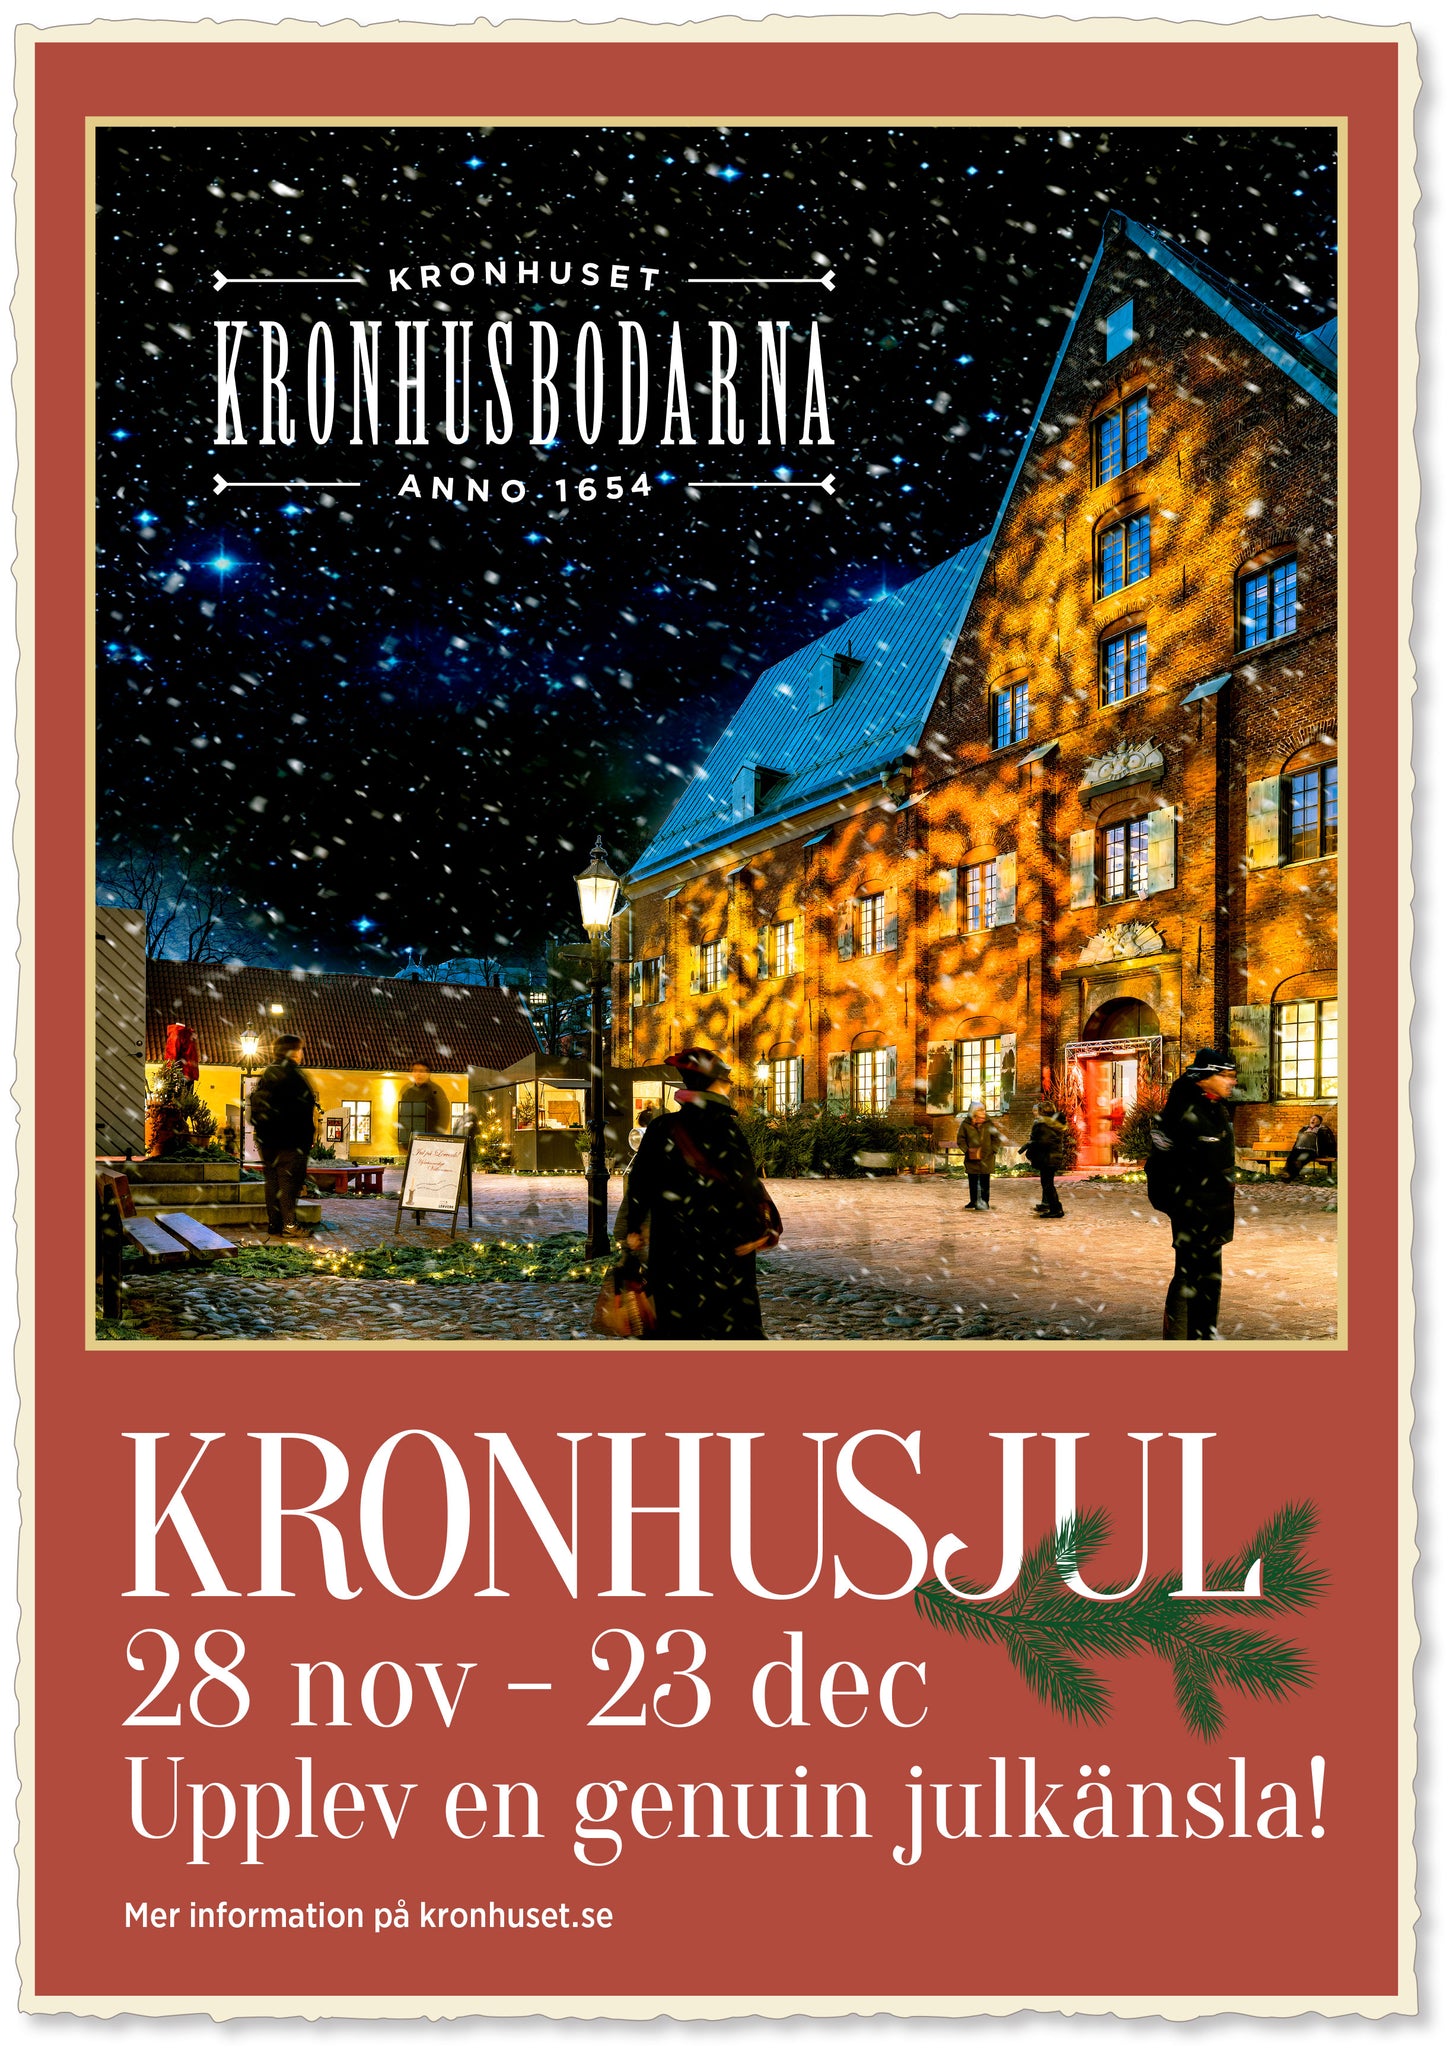 Kronhusgården's Christmas pop up